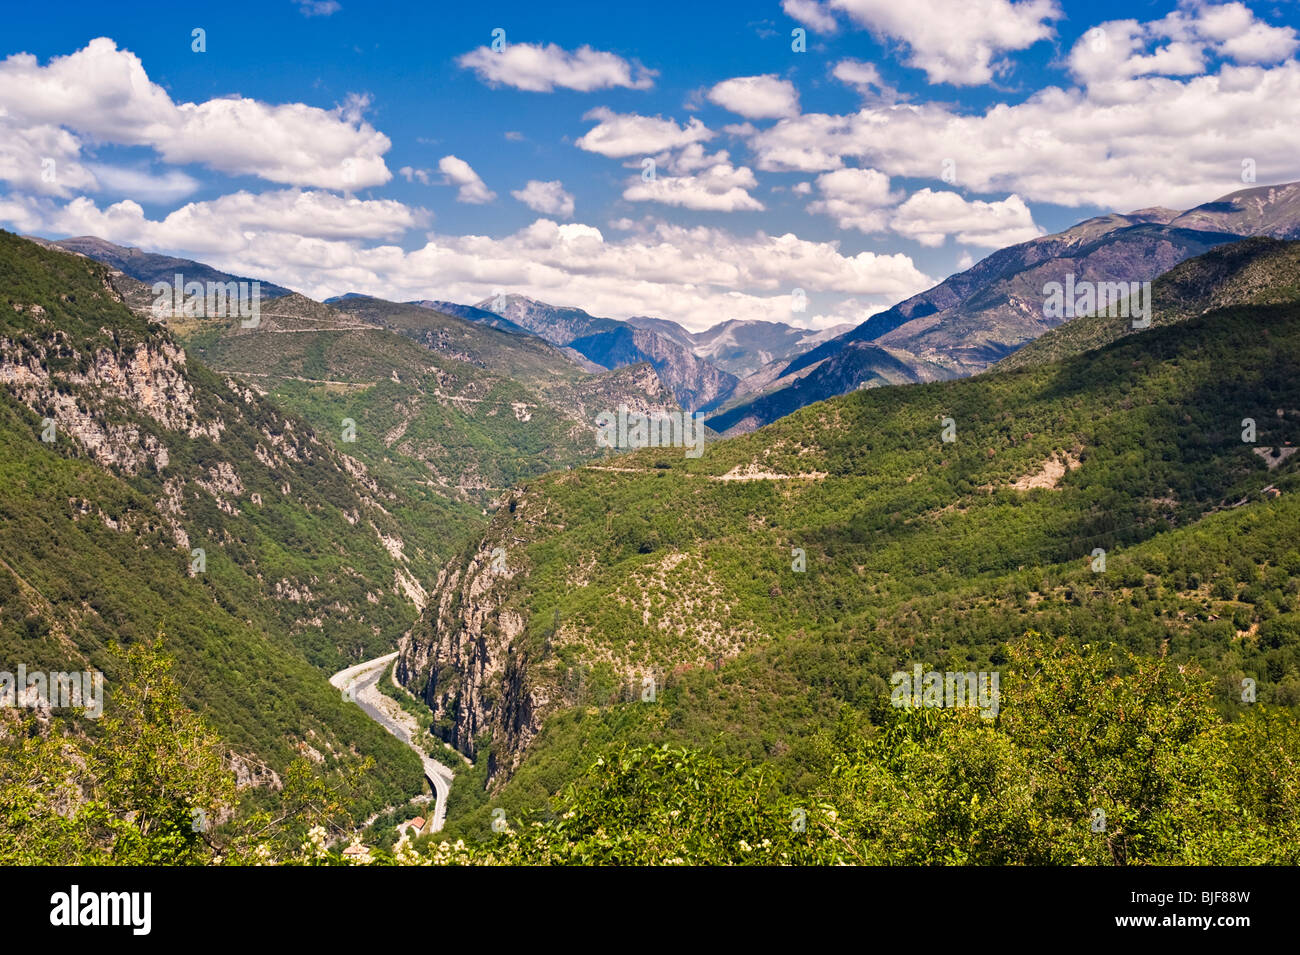 La rivière de la vallée de la Tinee Alpes Maritimes, sud de la France, Europe Banque D'Images